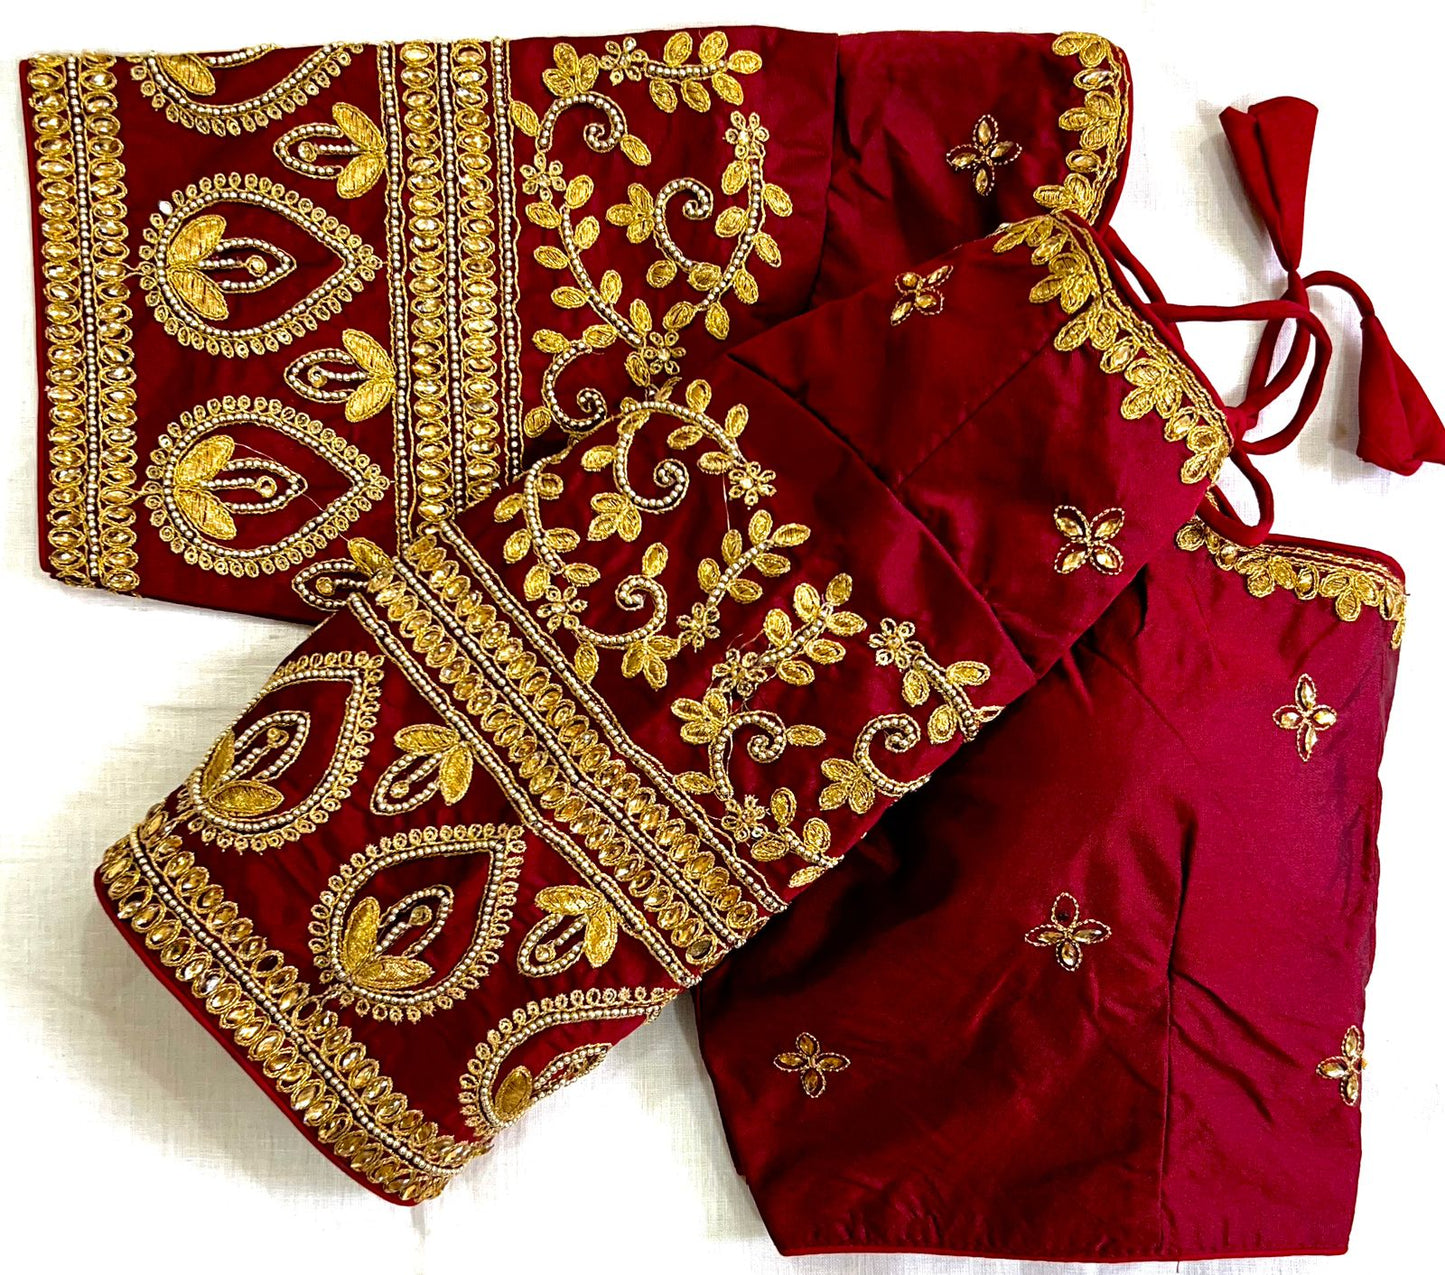 Madhuri design jari, thread, handwork and khatli hand work ready made blouse